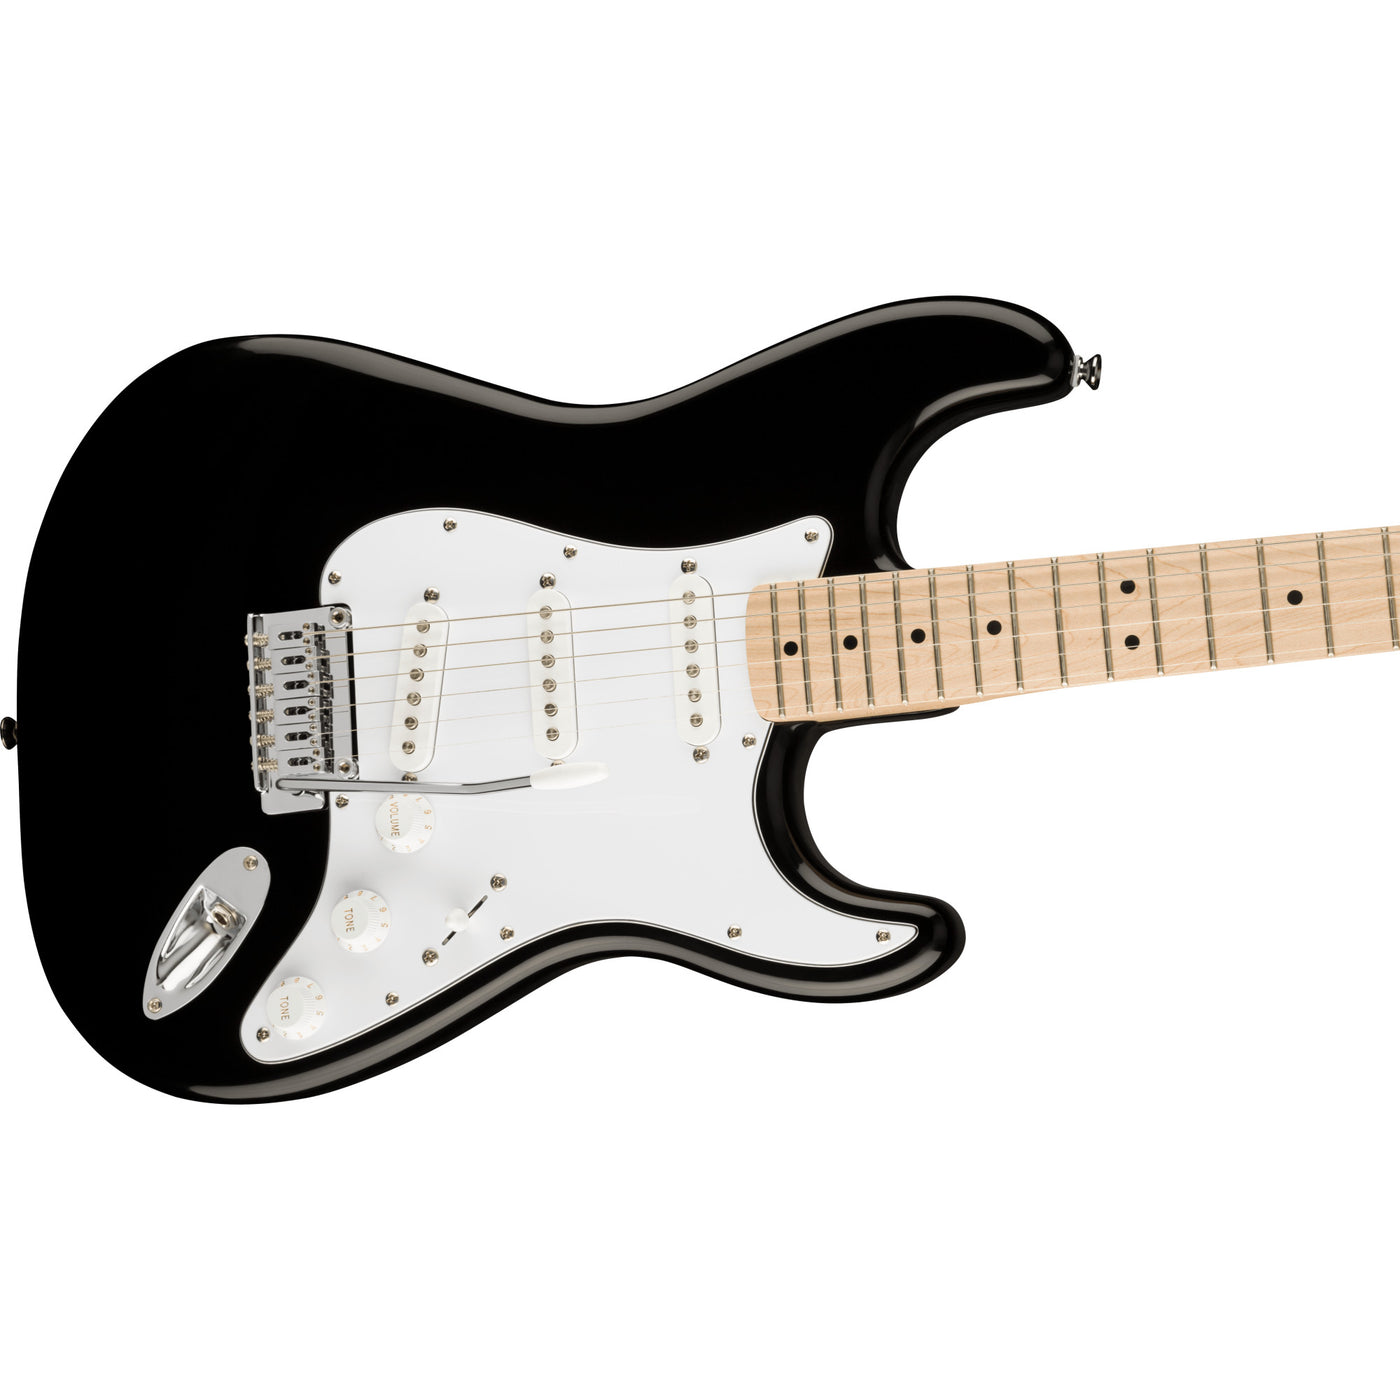 Fender Affinity Series Stratocaster Electric Guitar, Black (0378002506)